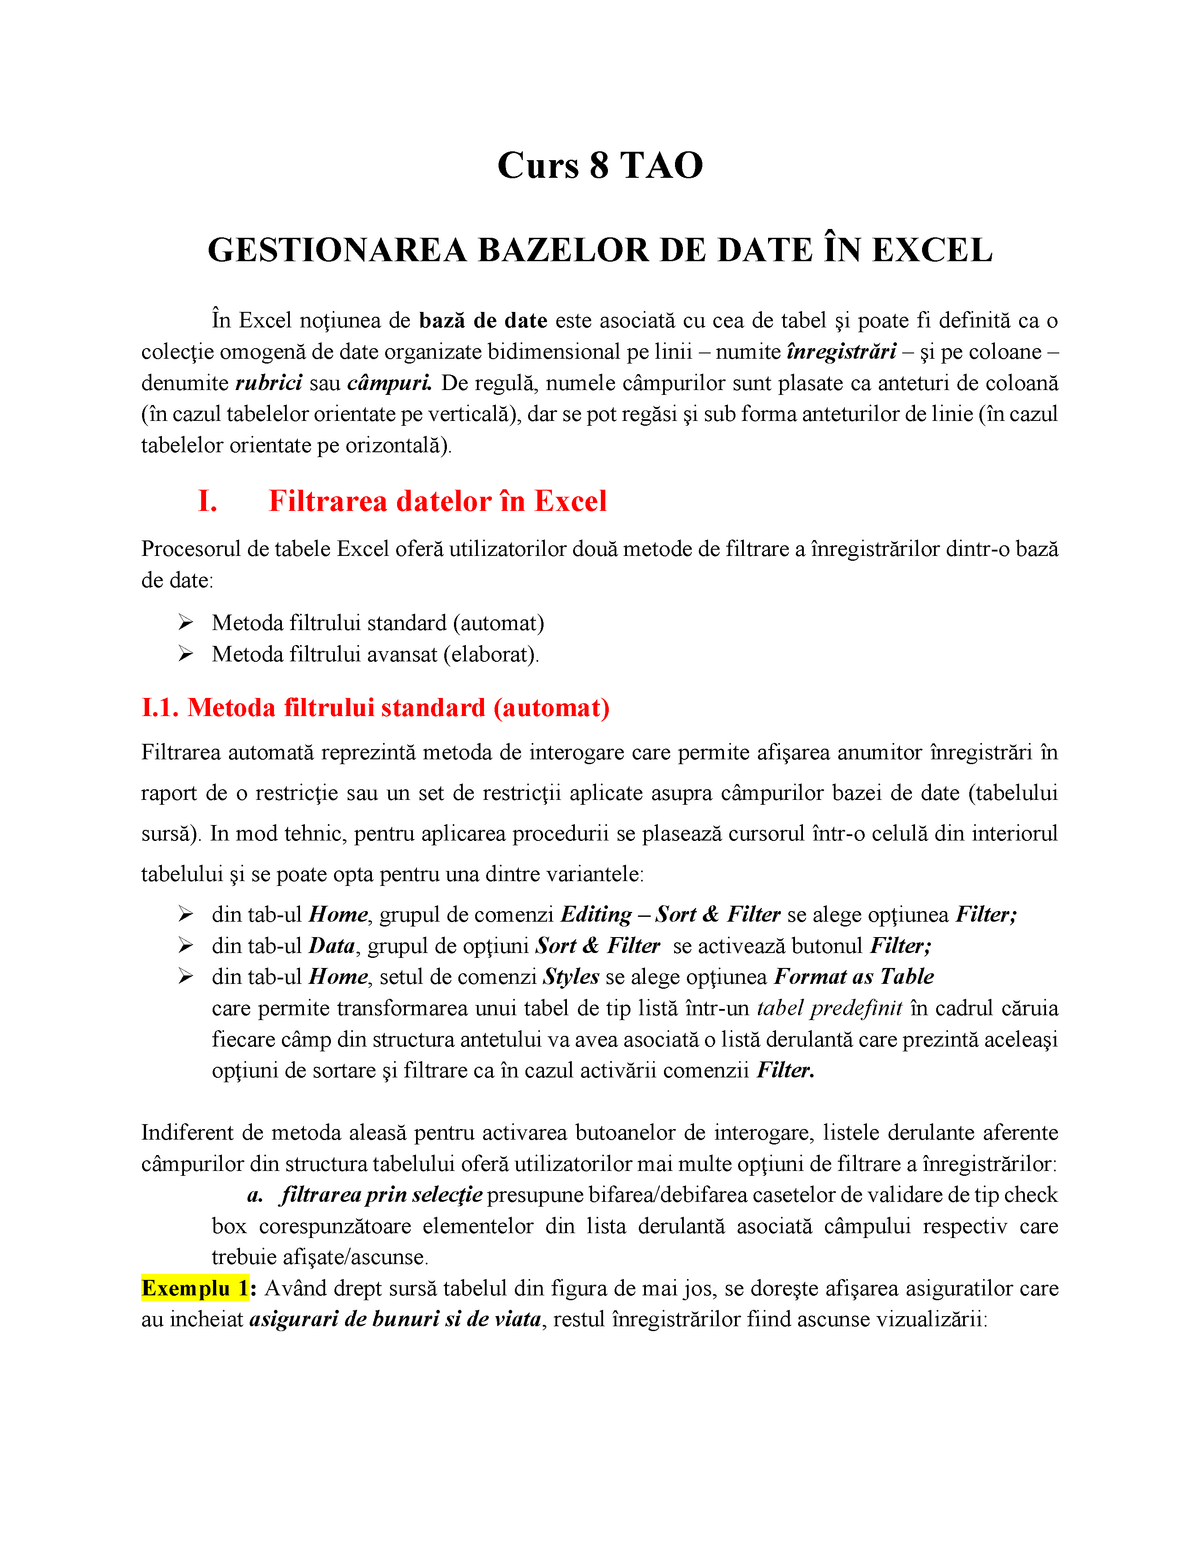 Curs 8 TAO Gestionarea bazelor de date Excel Validarea datelor in ...